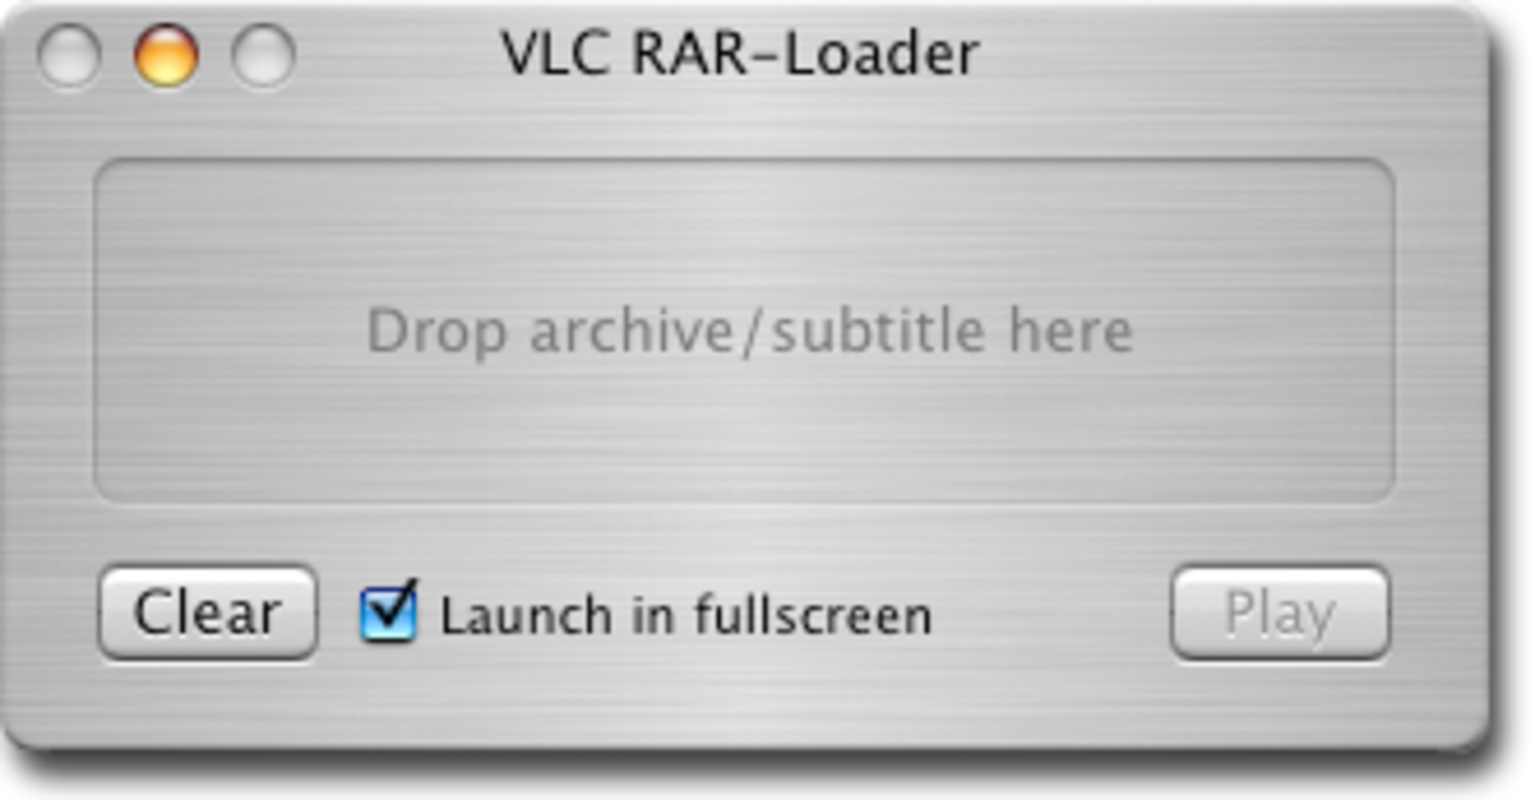 VLC RAR-Loader 1.3 for Mac Screenshot 1